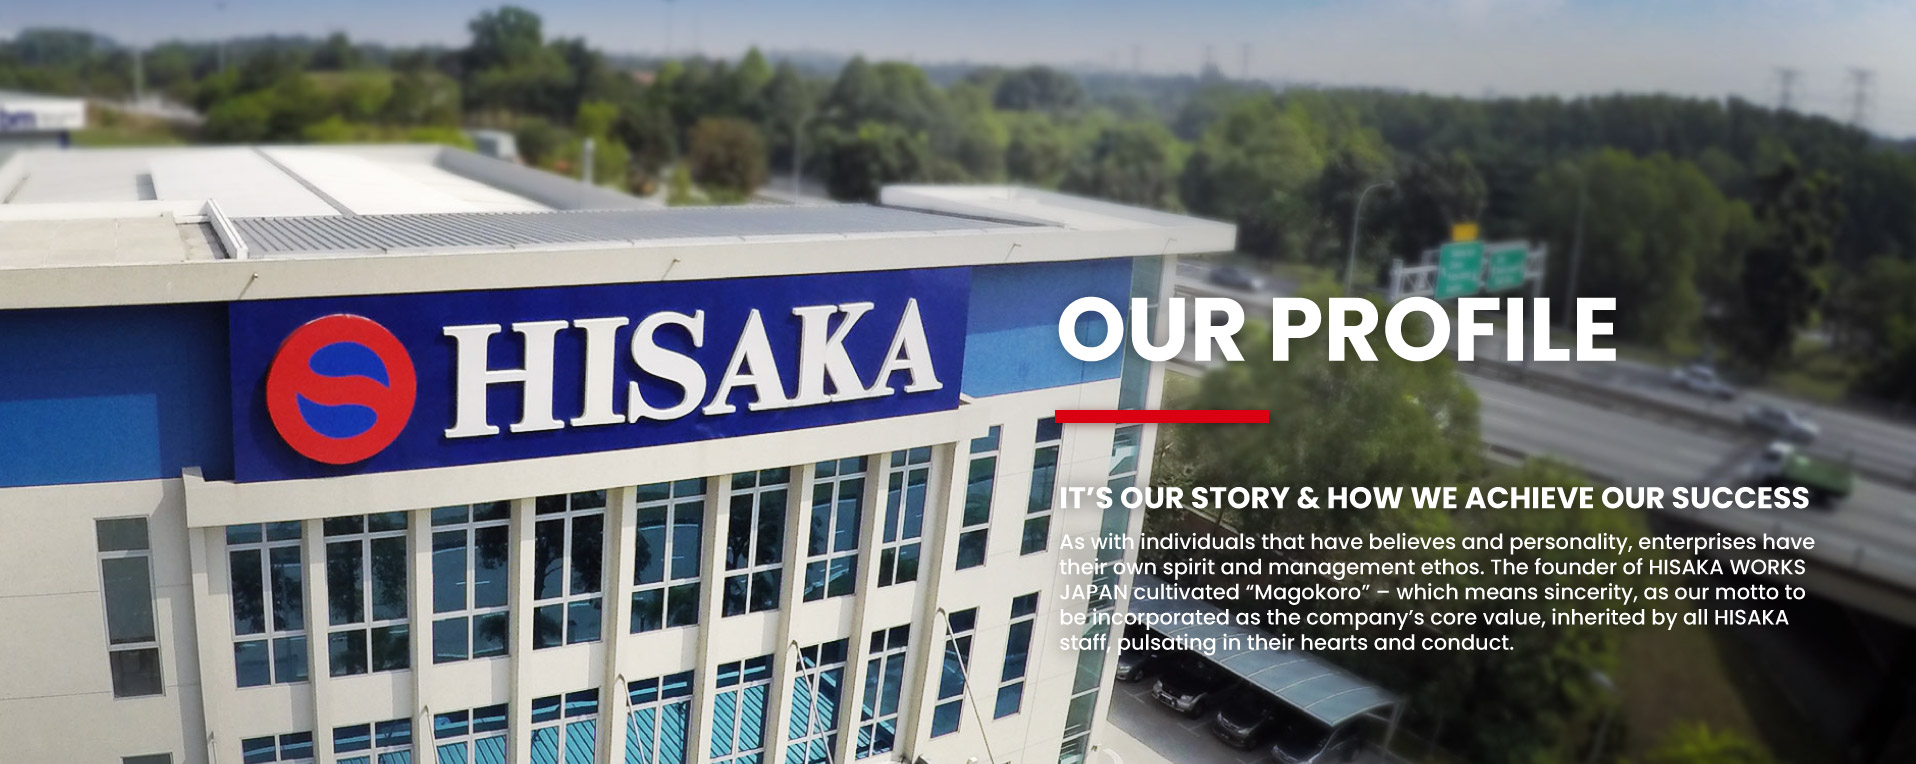 Hisaka-Asia - Our Profile